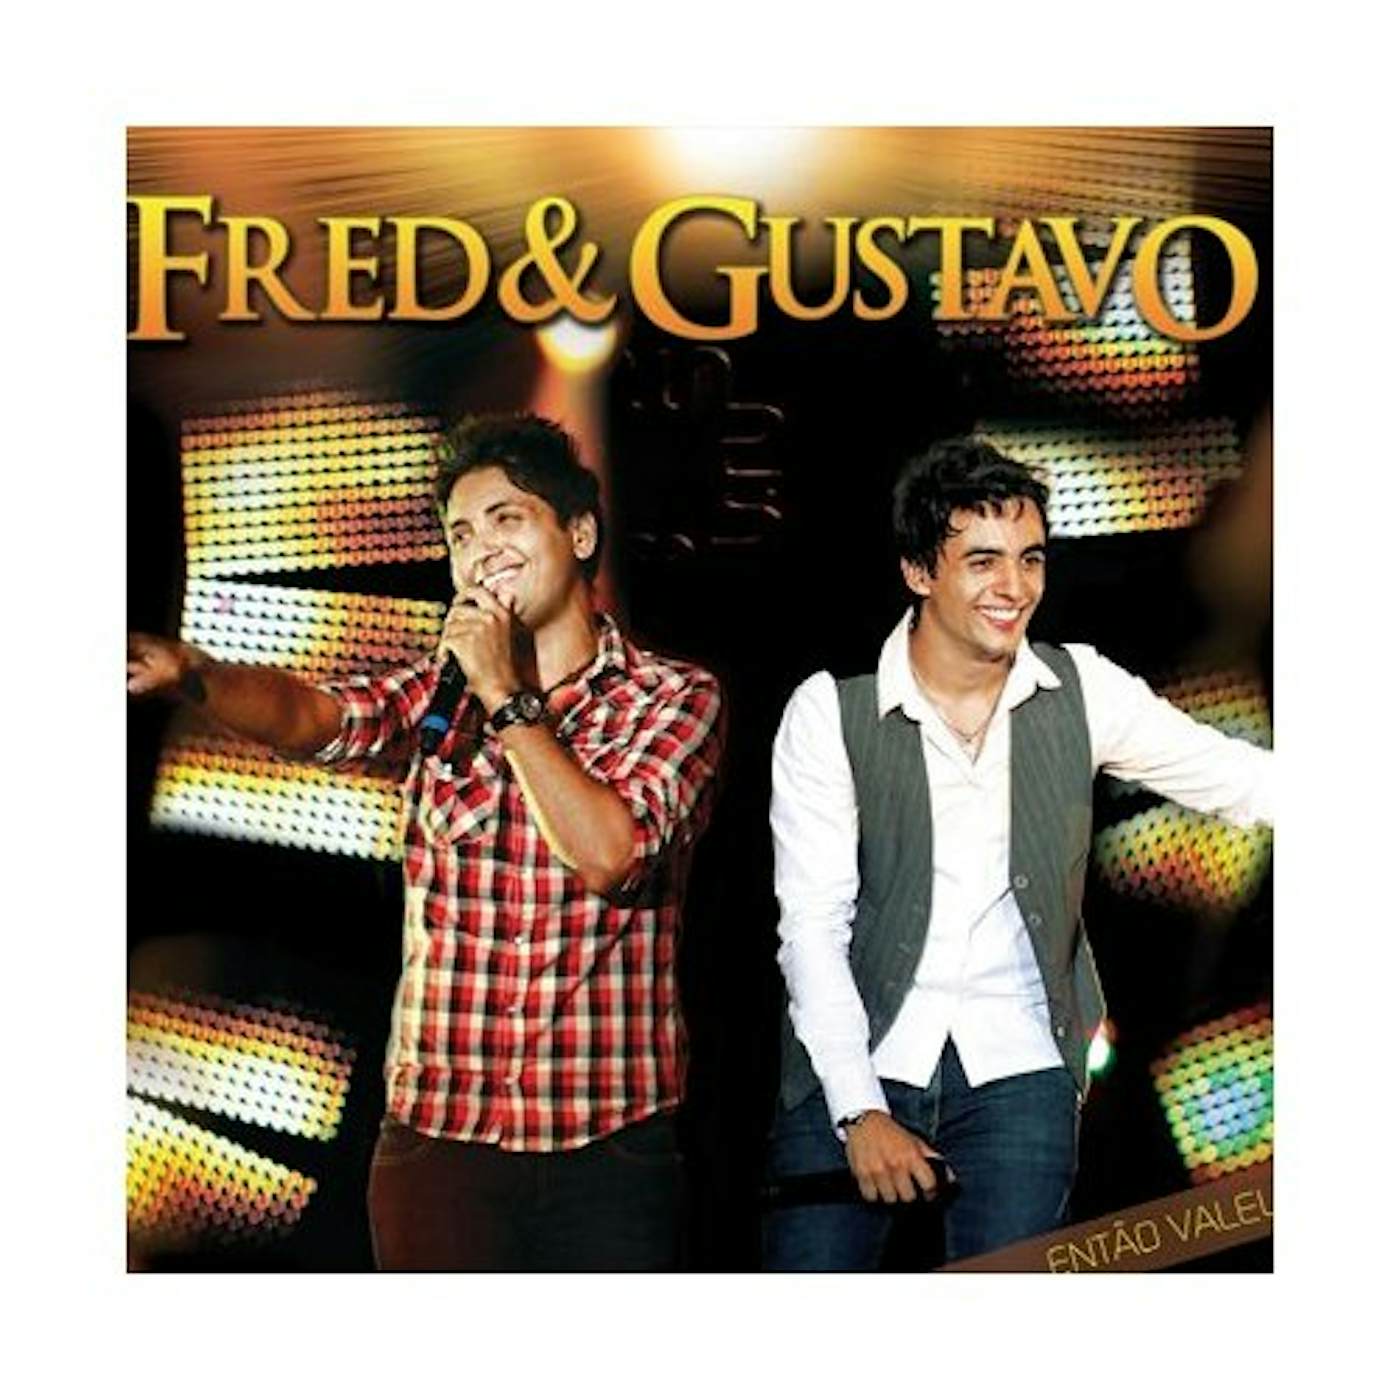 Fred & Gustavo ENTAO VALEU CD